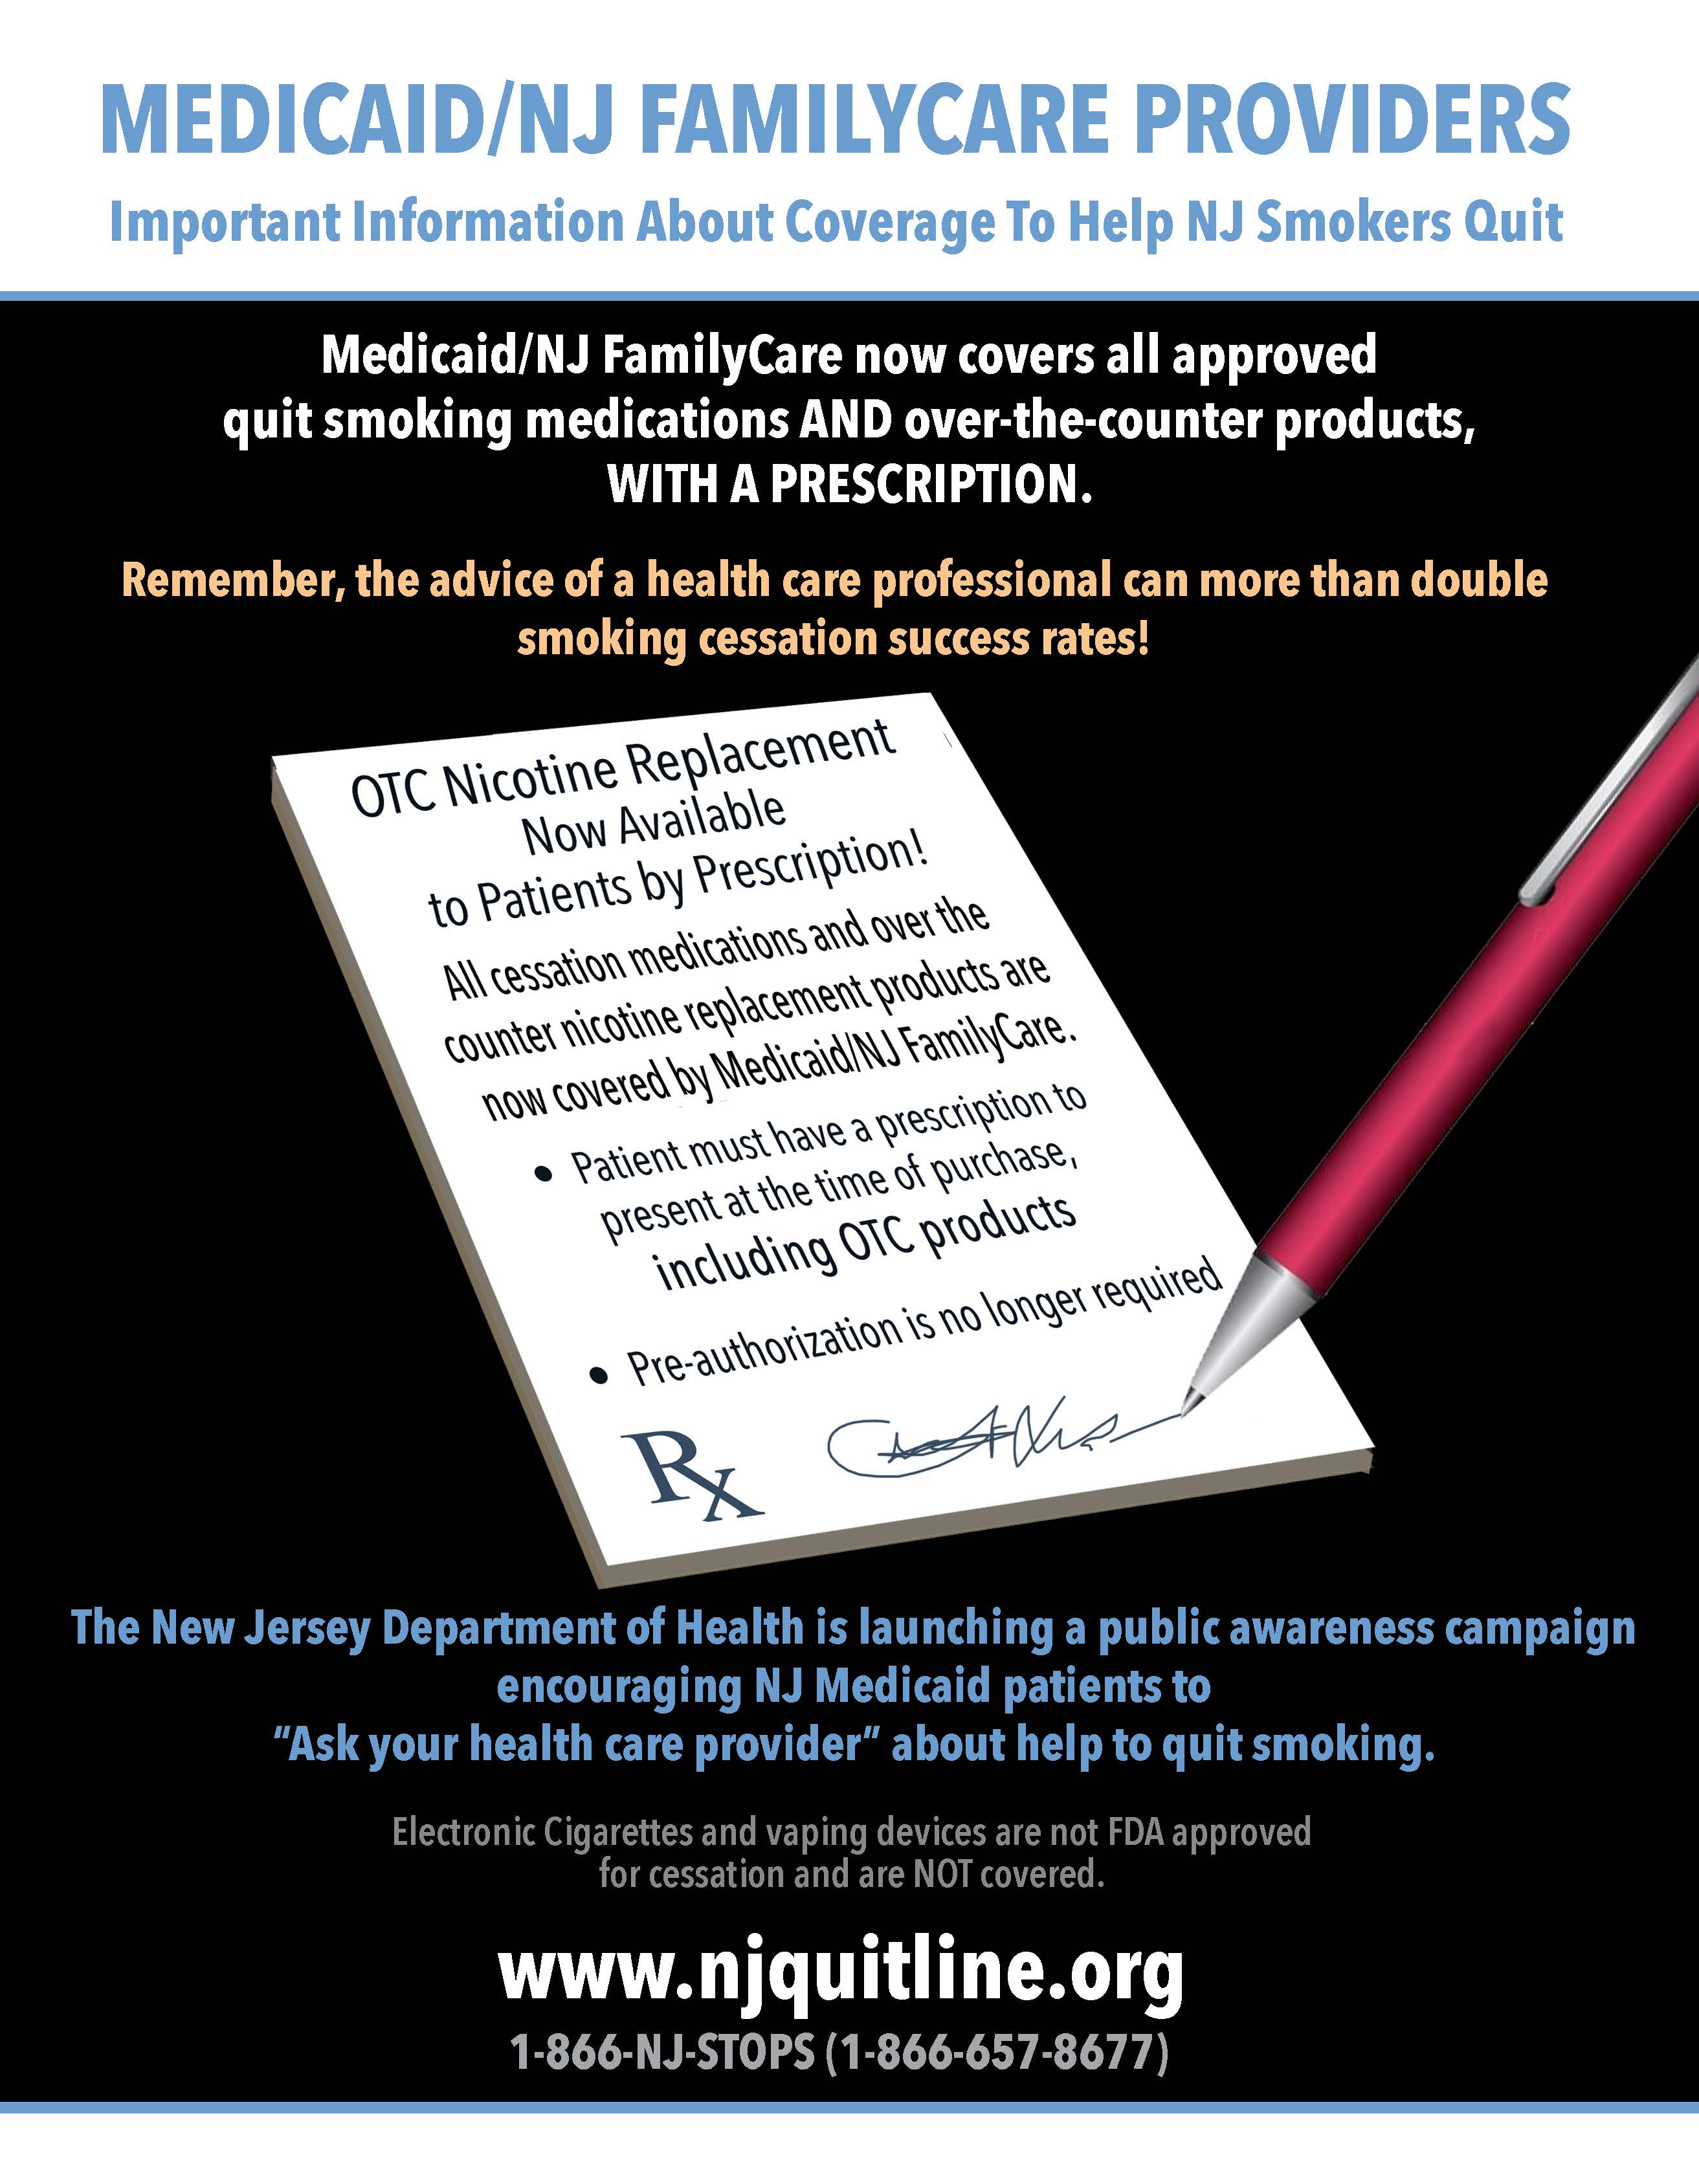 NJ FamilyCare/Medicaid Provider Cessation Medication Coverage Flyer